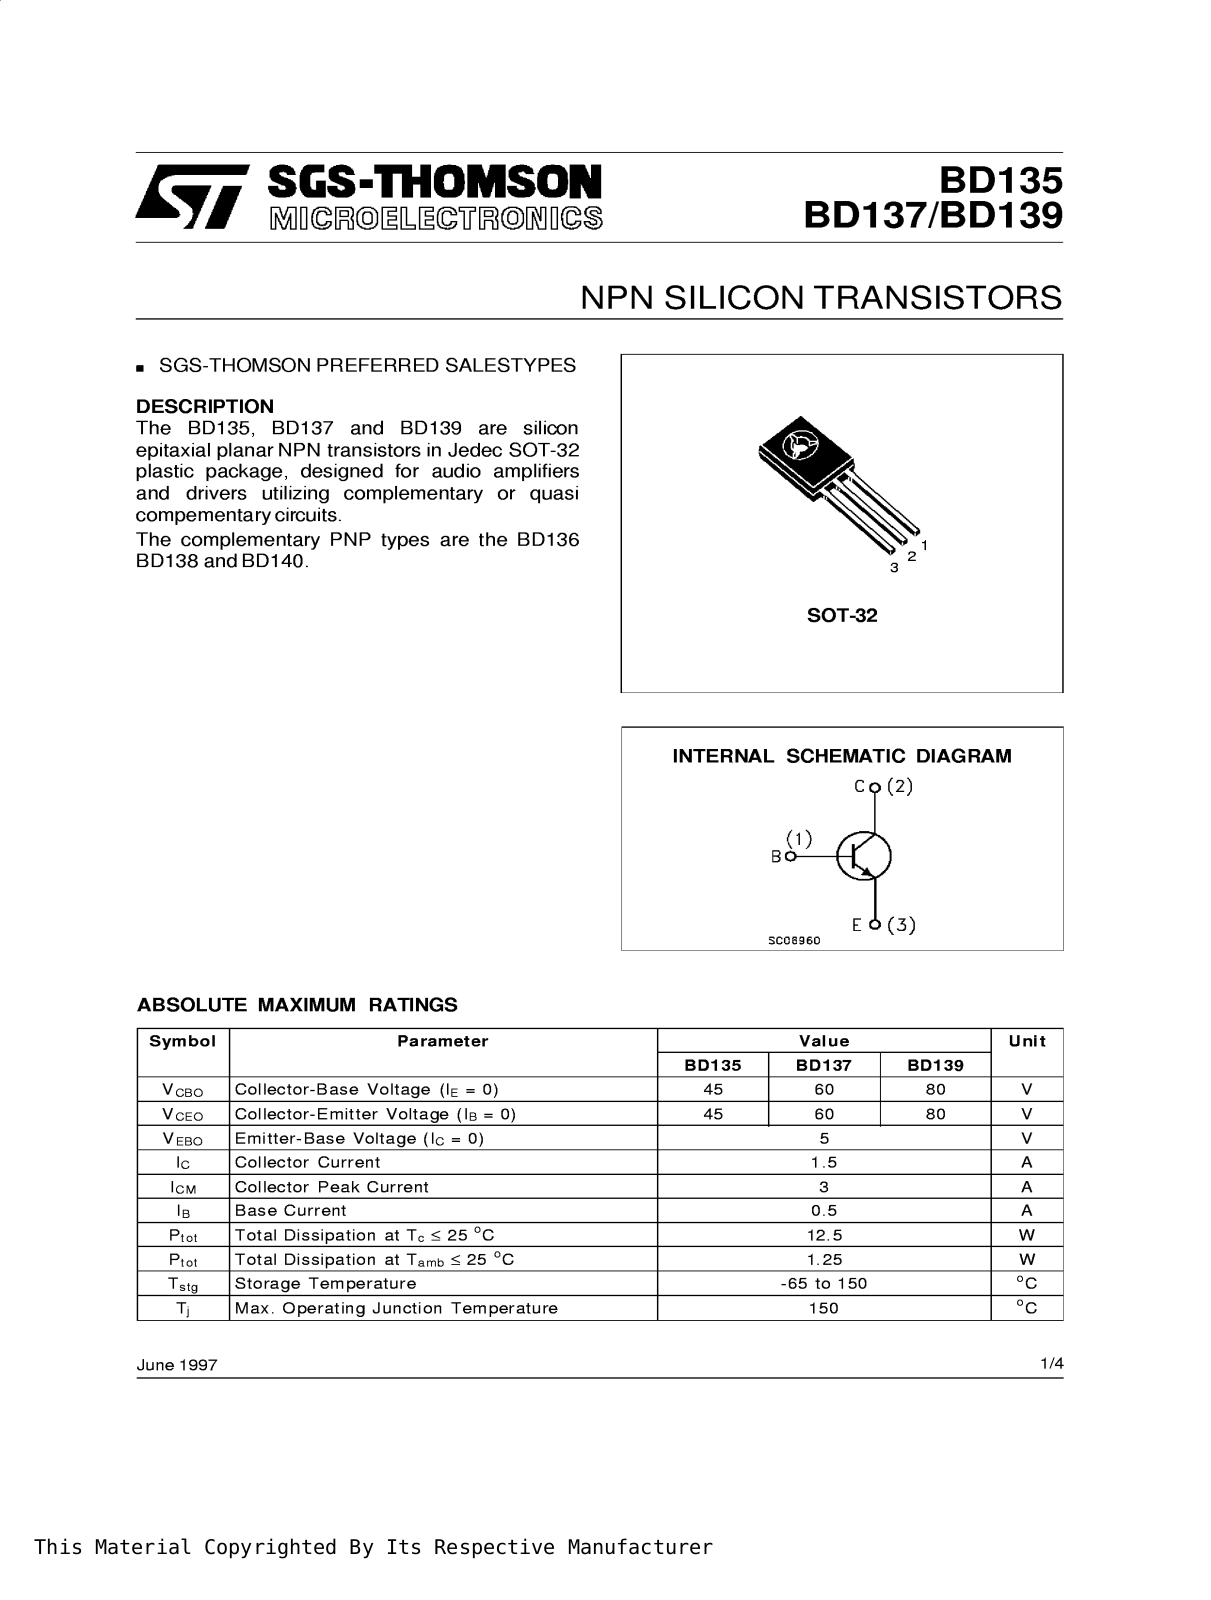 SGS Thomson Microelectronics BD137 Datasheet